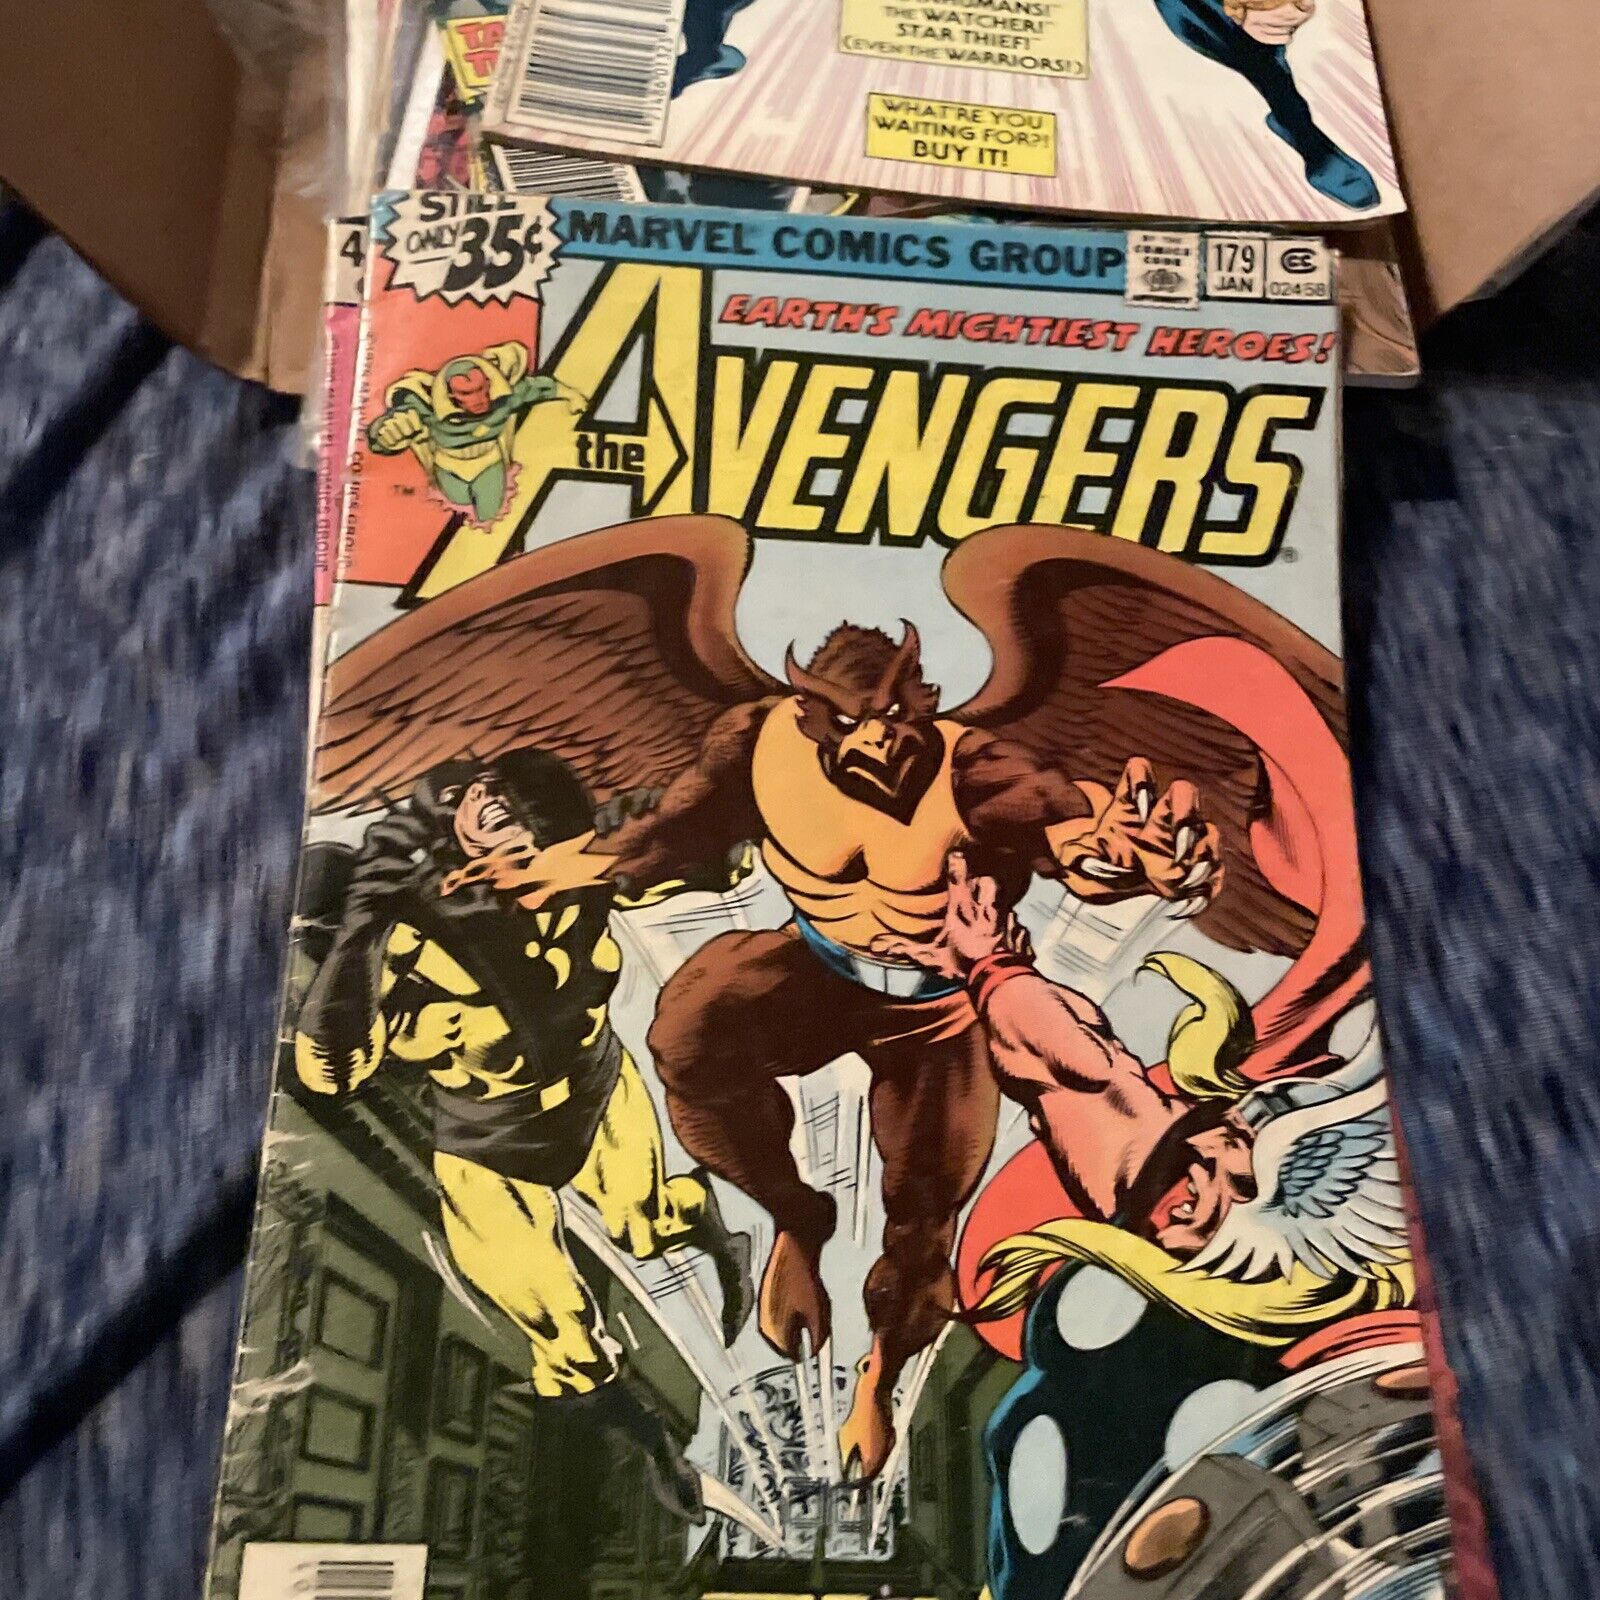 The Avengers #179 (Marvel Comics January 1979)